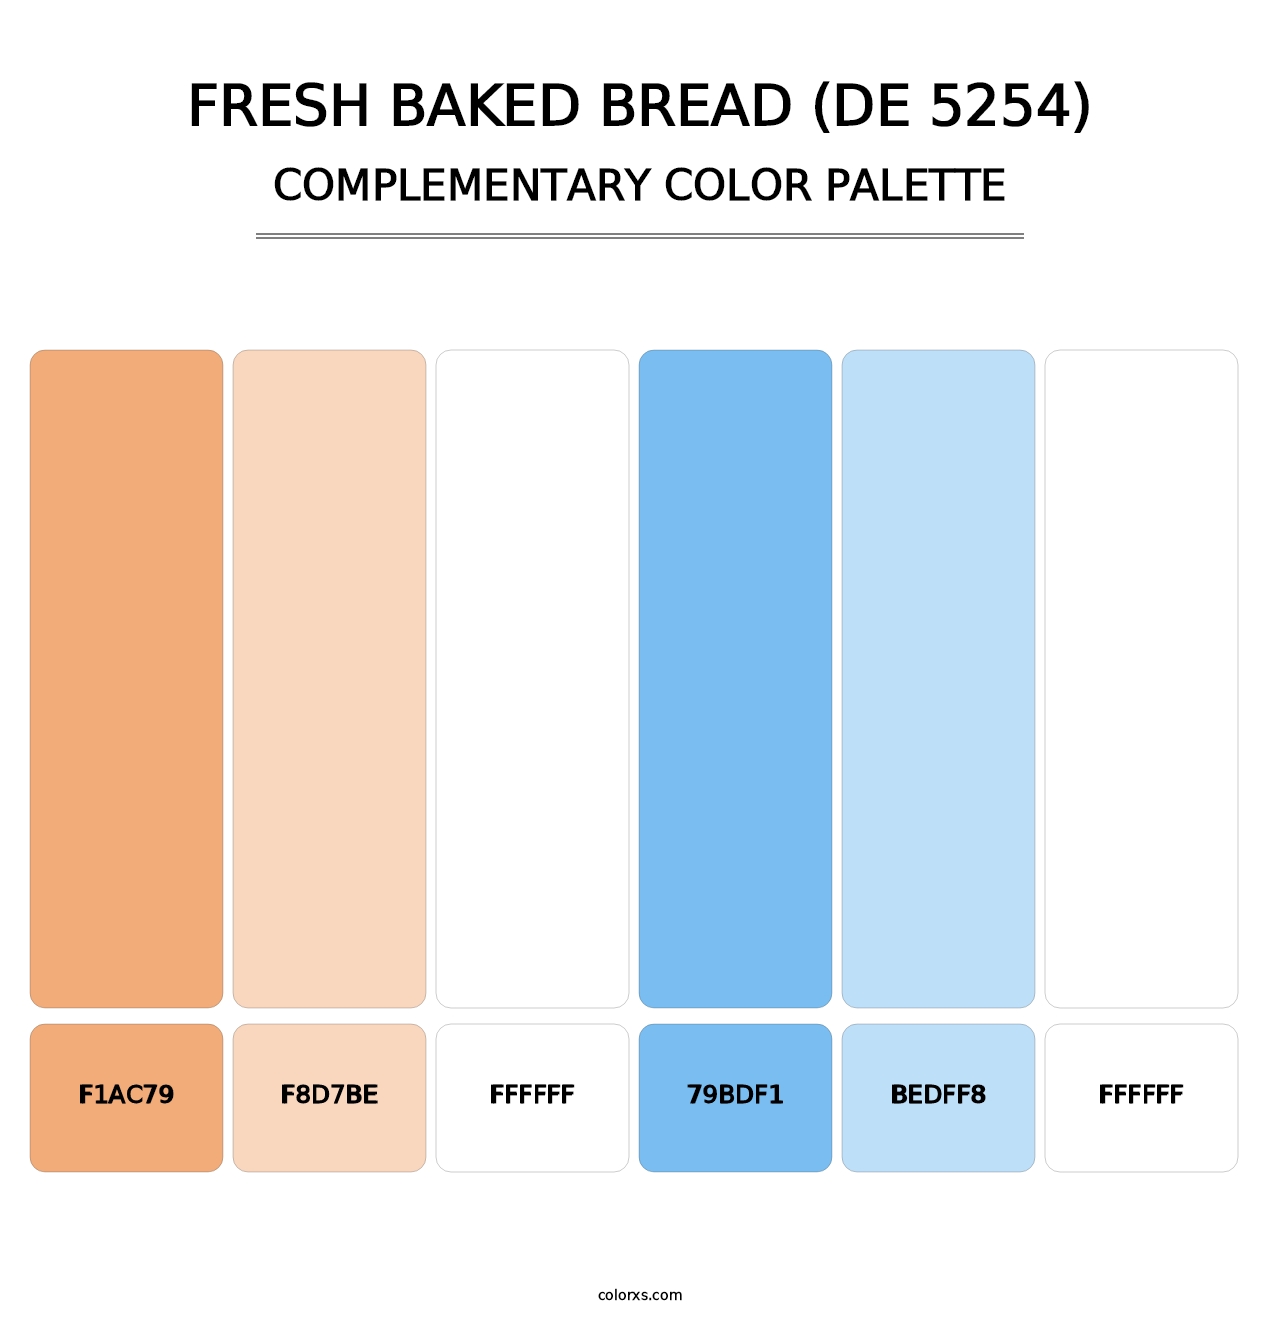 Fresh Baked Bread (DE 5254) - Complementary Color Palette